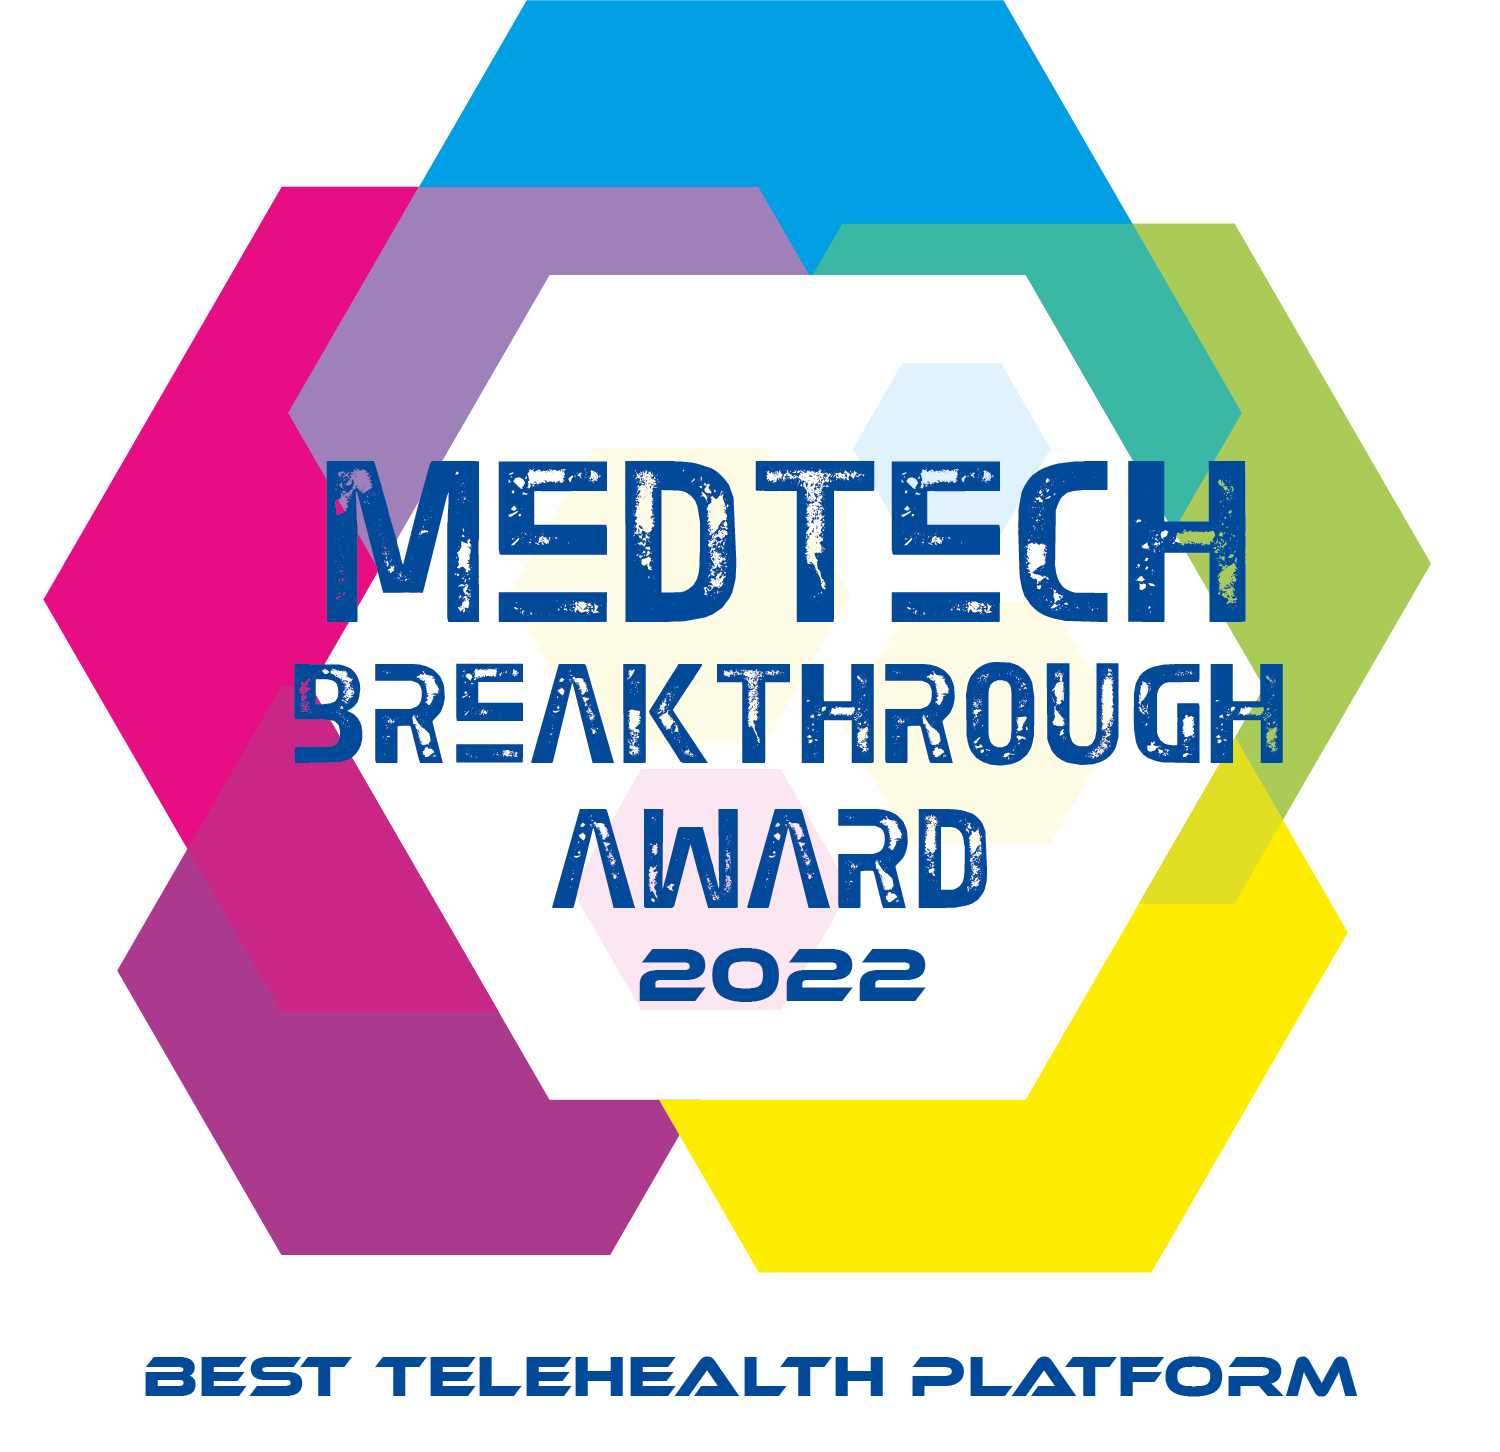 “Best Telehealth Platform” Award